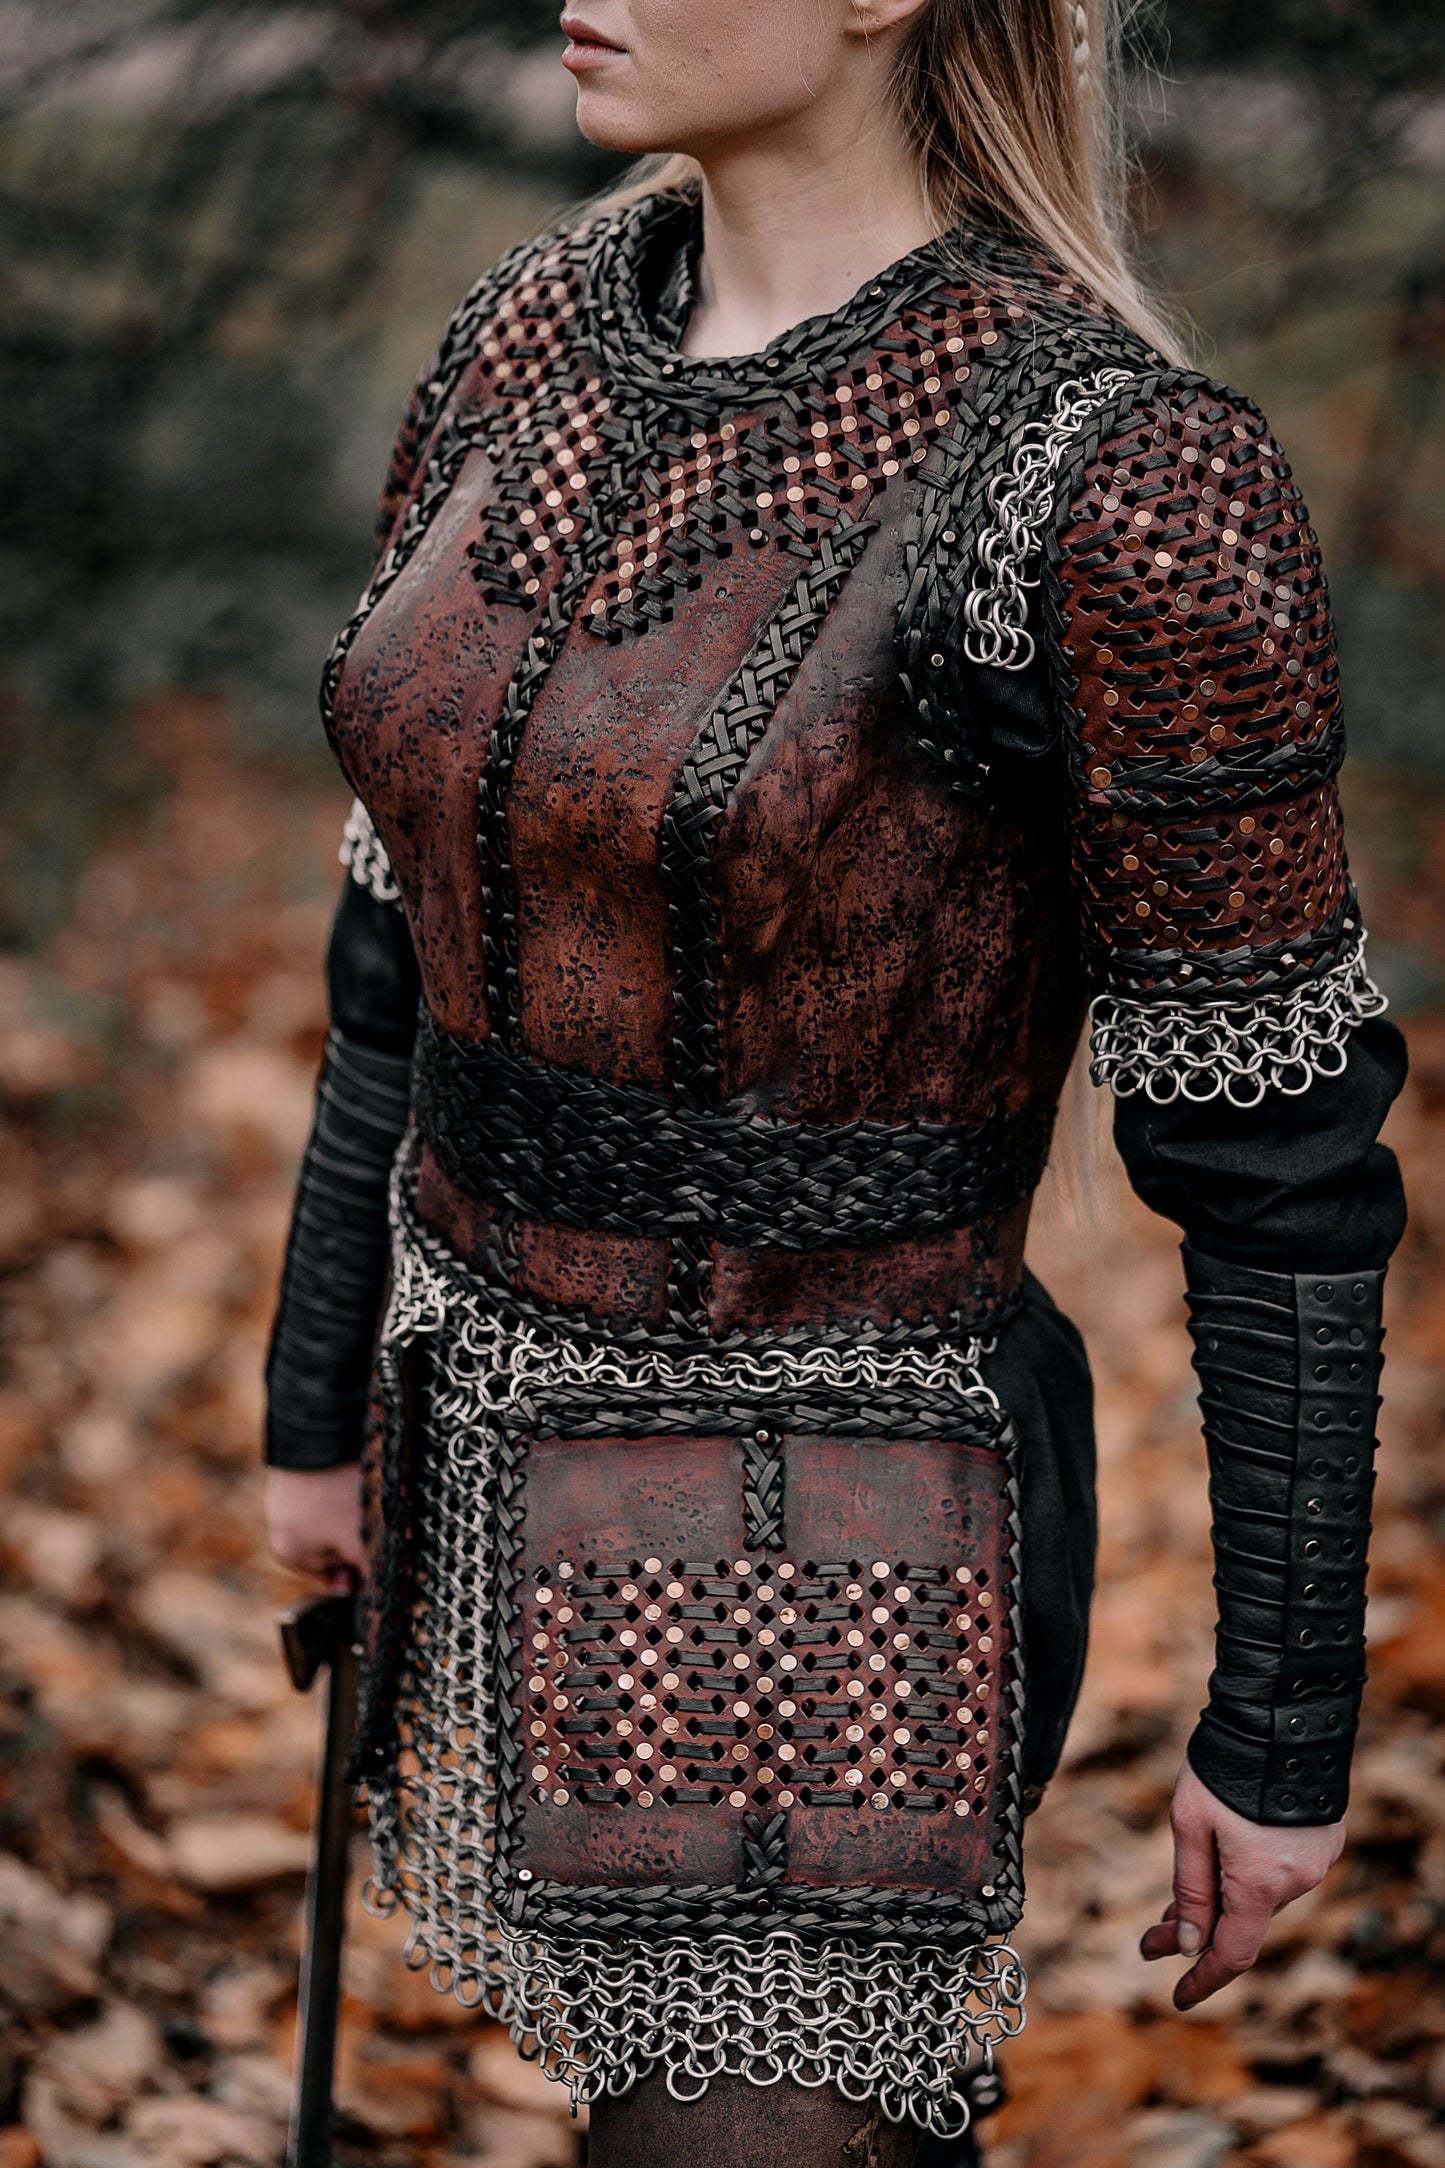 Lagertha viking costume (Vikings)